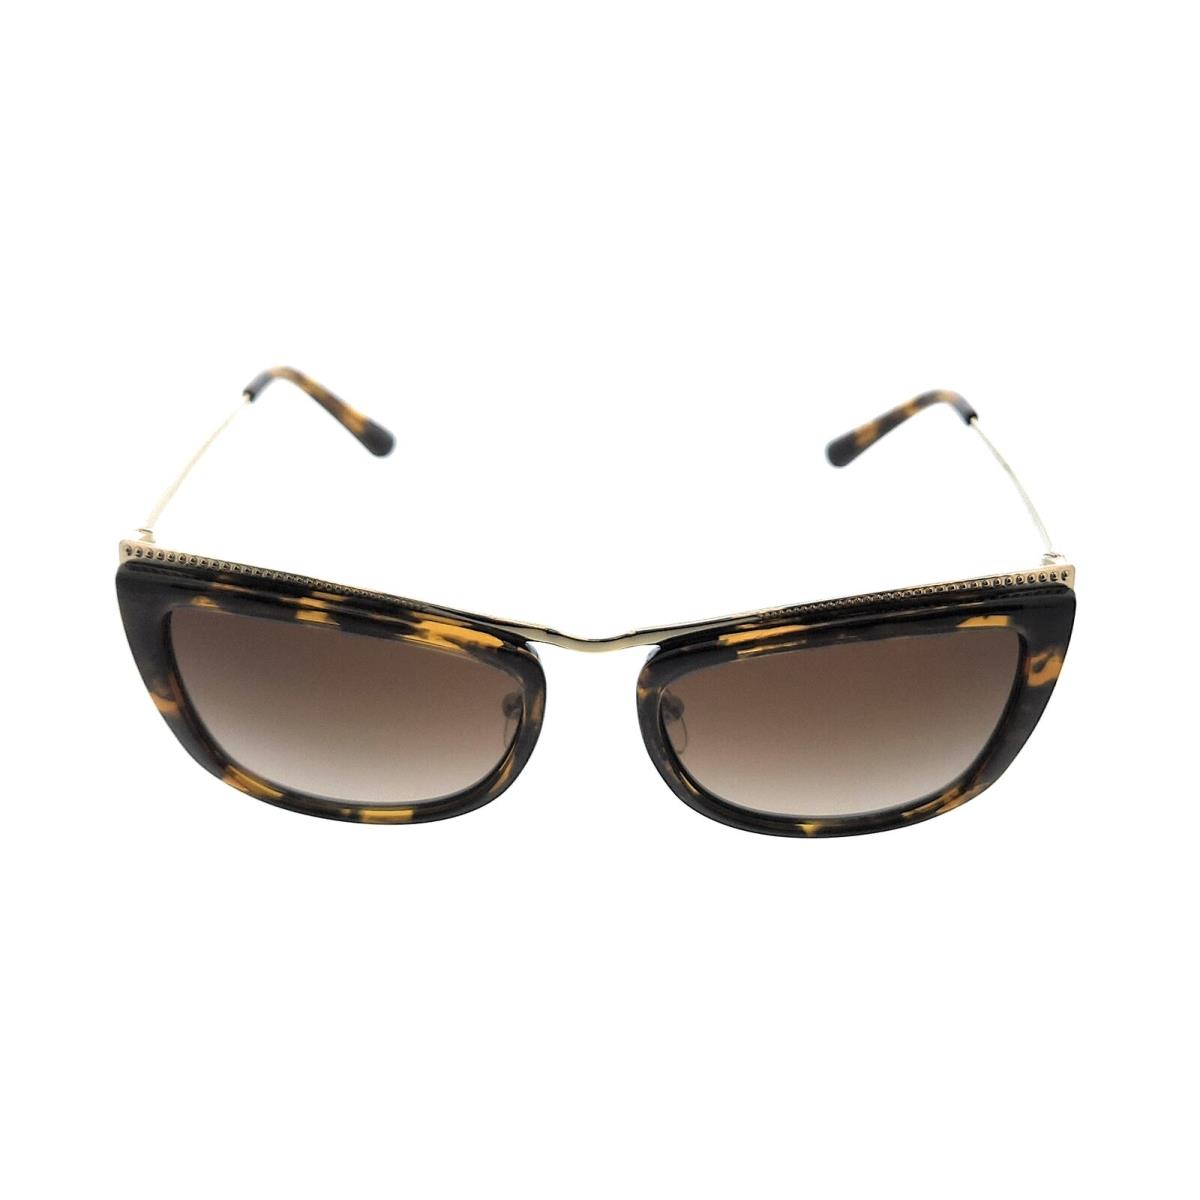 Michael Kors 0MK1064 101413 Zaria Gold-tortoise Cat Eye Sunglasses